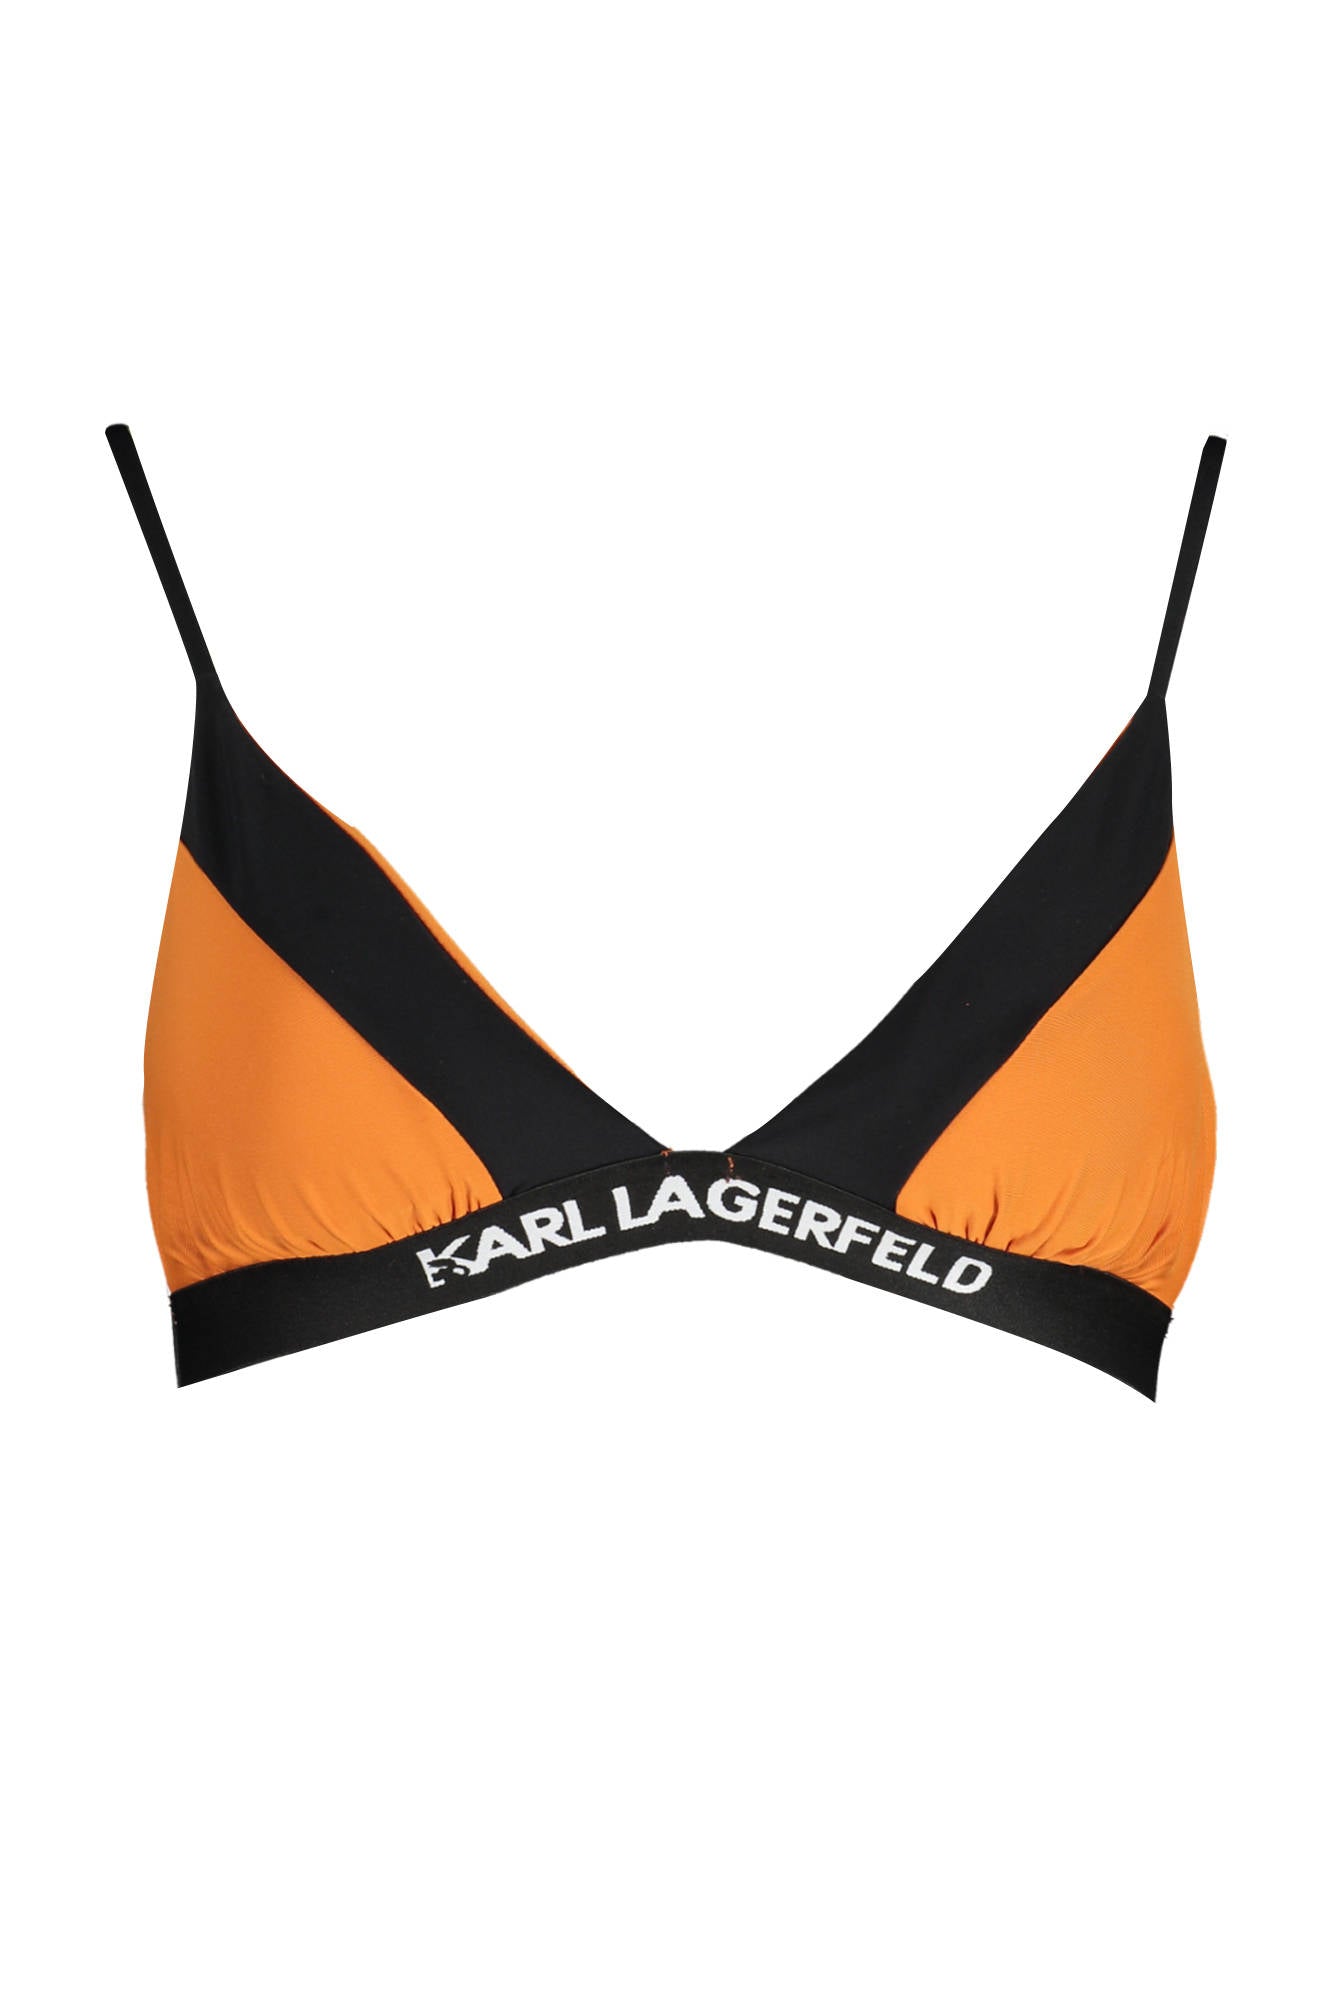 KARL LAGERFELD BEACHWEAR TOP WOMEN'S COSTUME ORANGE